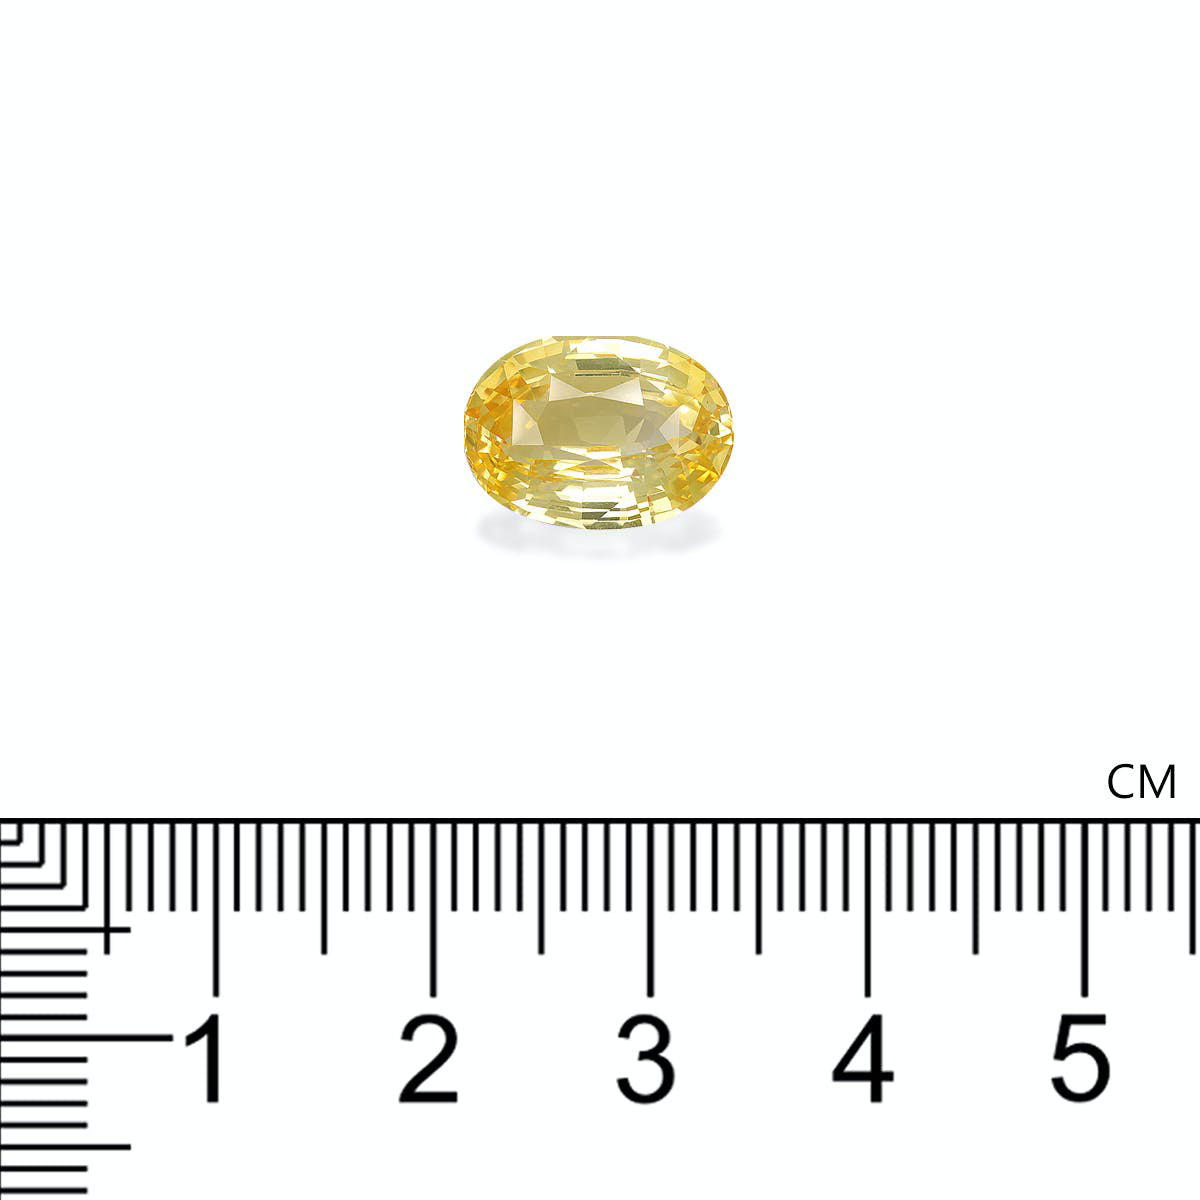 Picture of Yellow Sapphire Unheated Sri Lanka 5.63ct (YS0035)